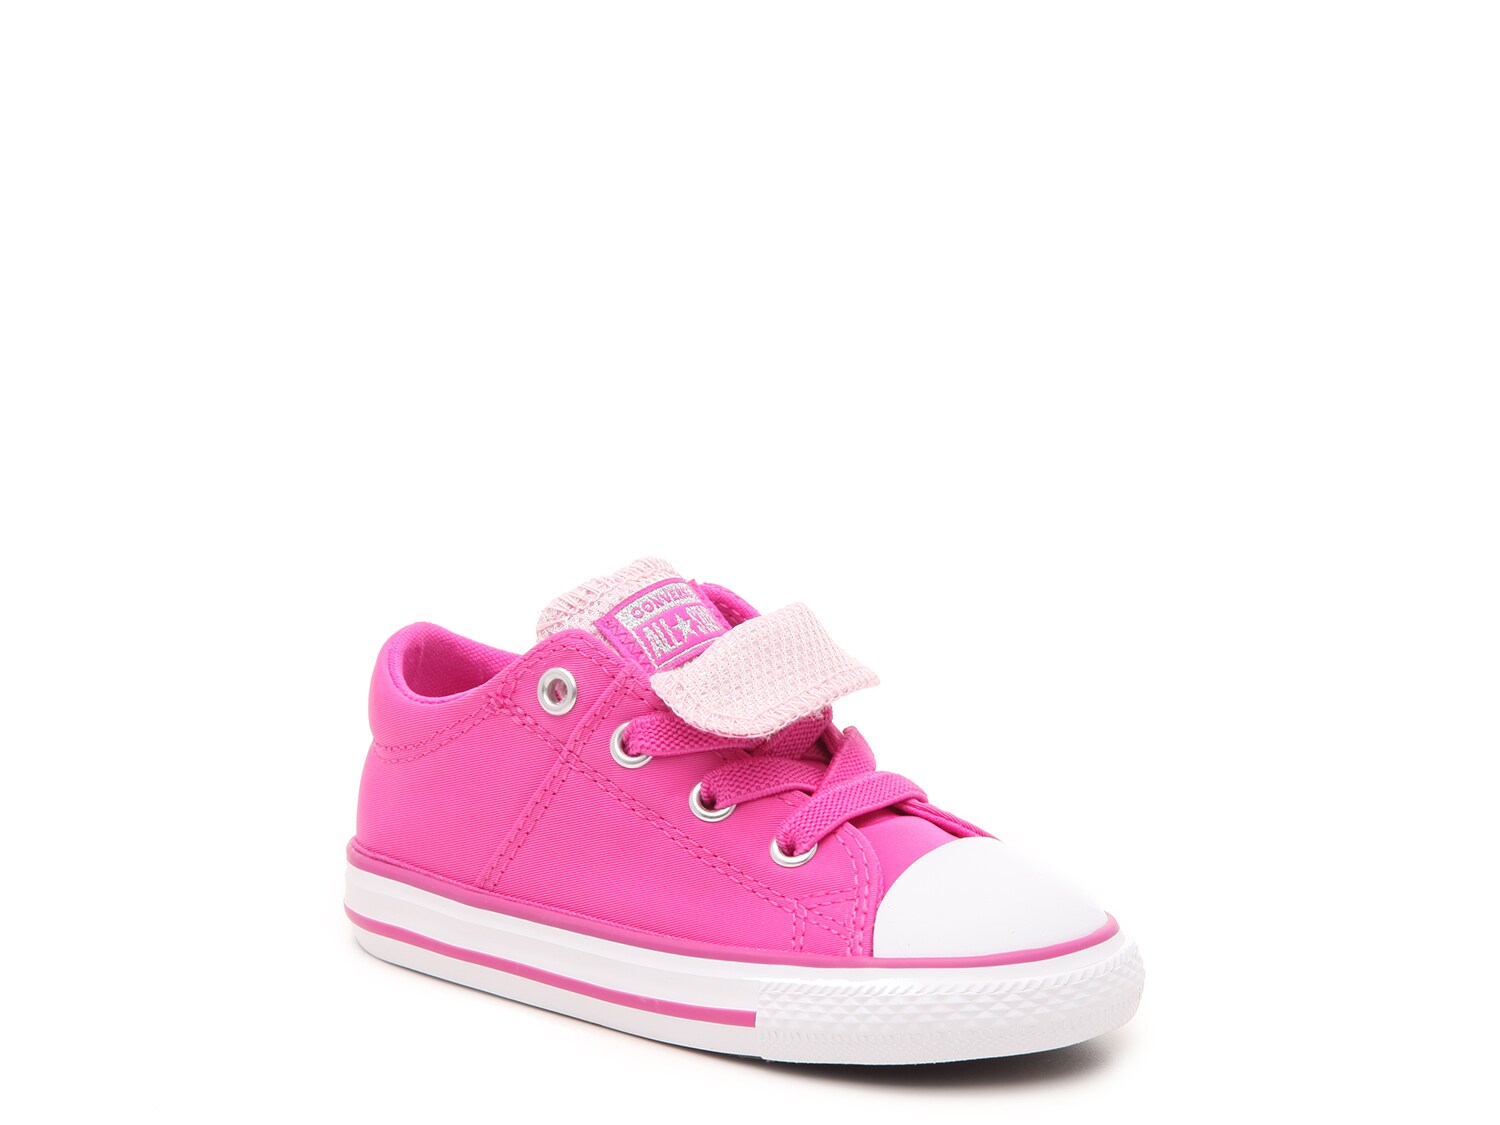 Converse Chuck Taylor All Star Maddie Slip-On Sneaker - Kids' | DSW